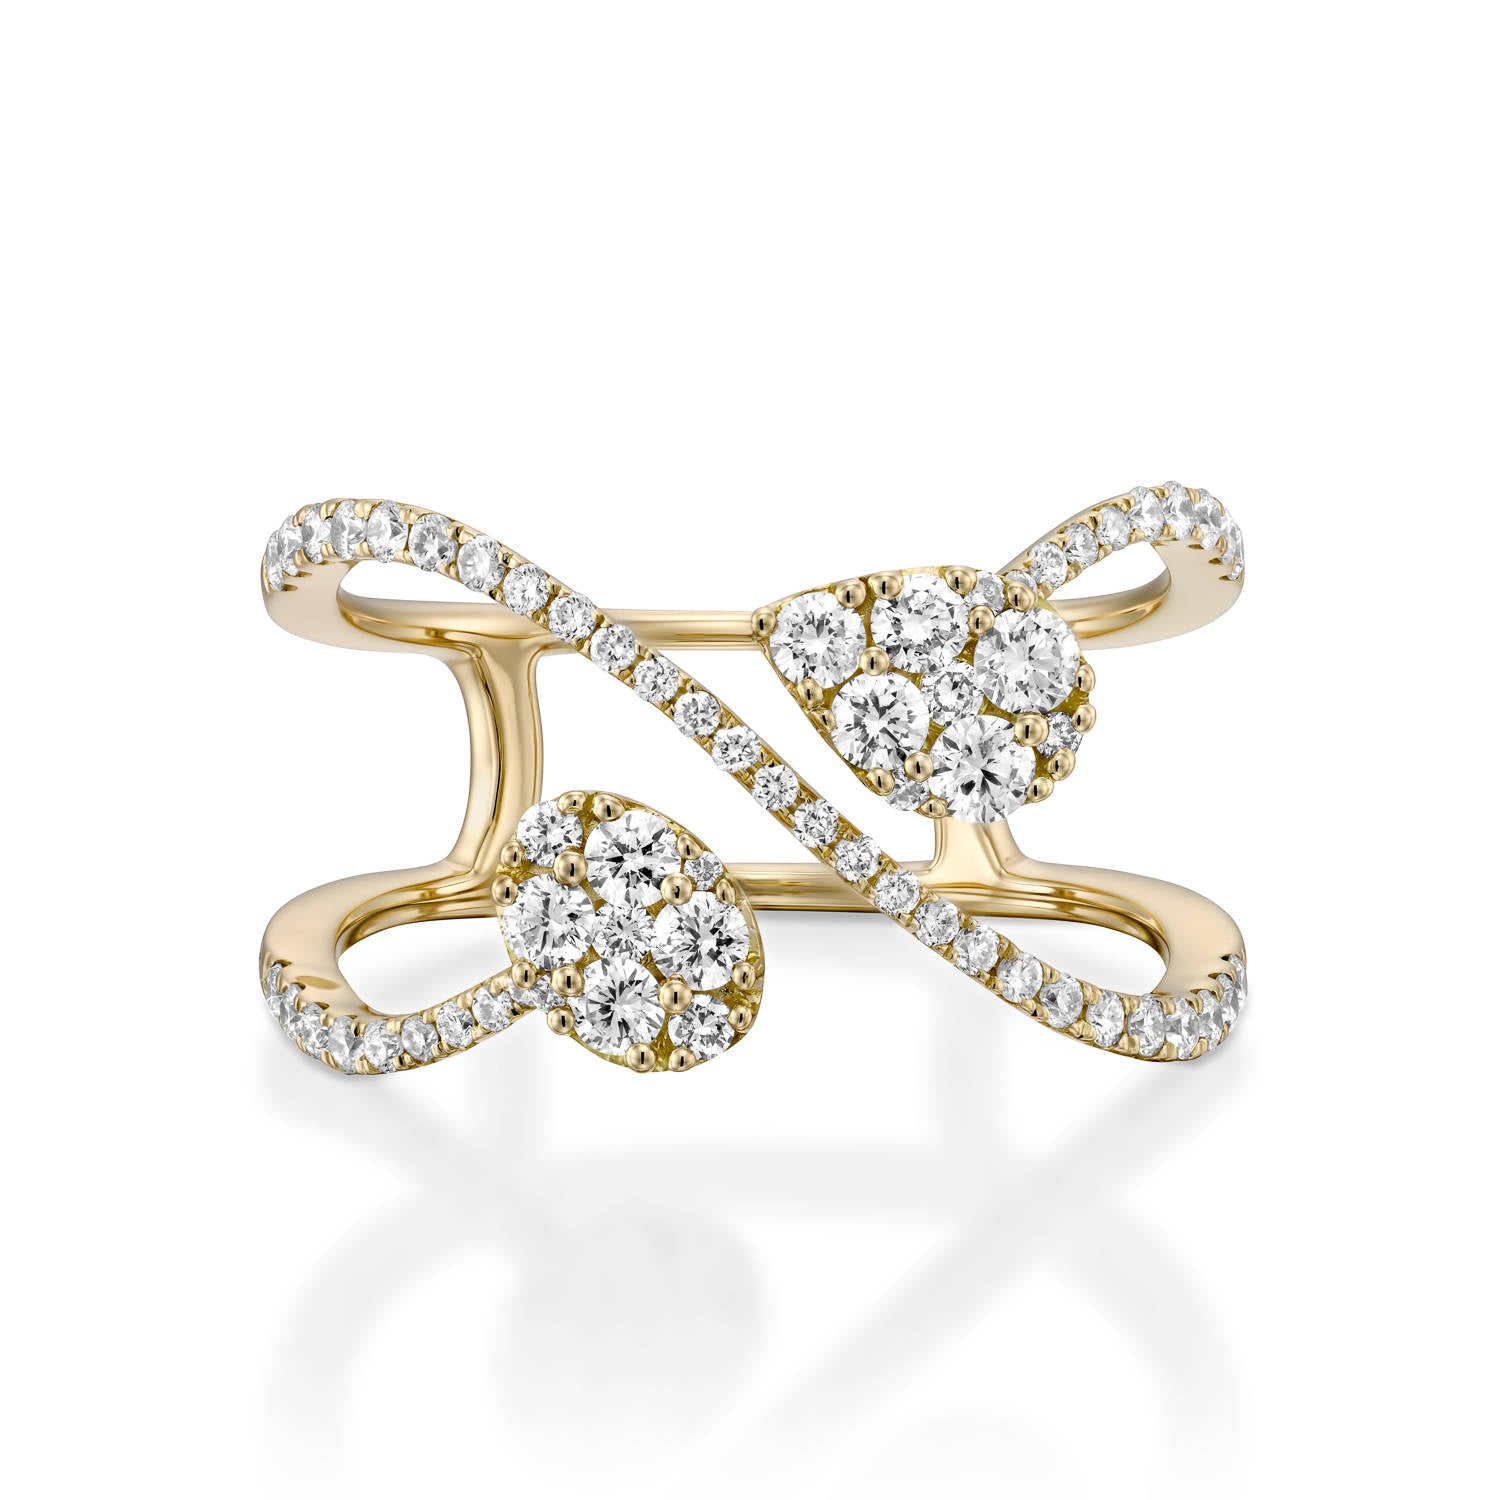 RNR18238-Unique women engagement ring Double diamond ring - Olivacom